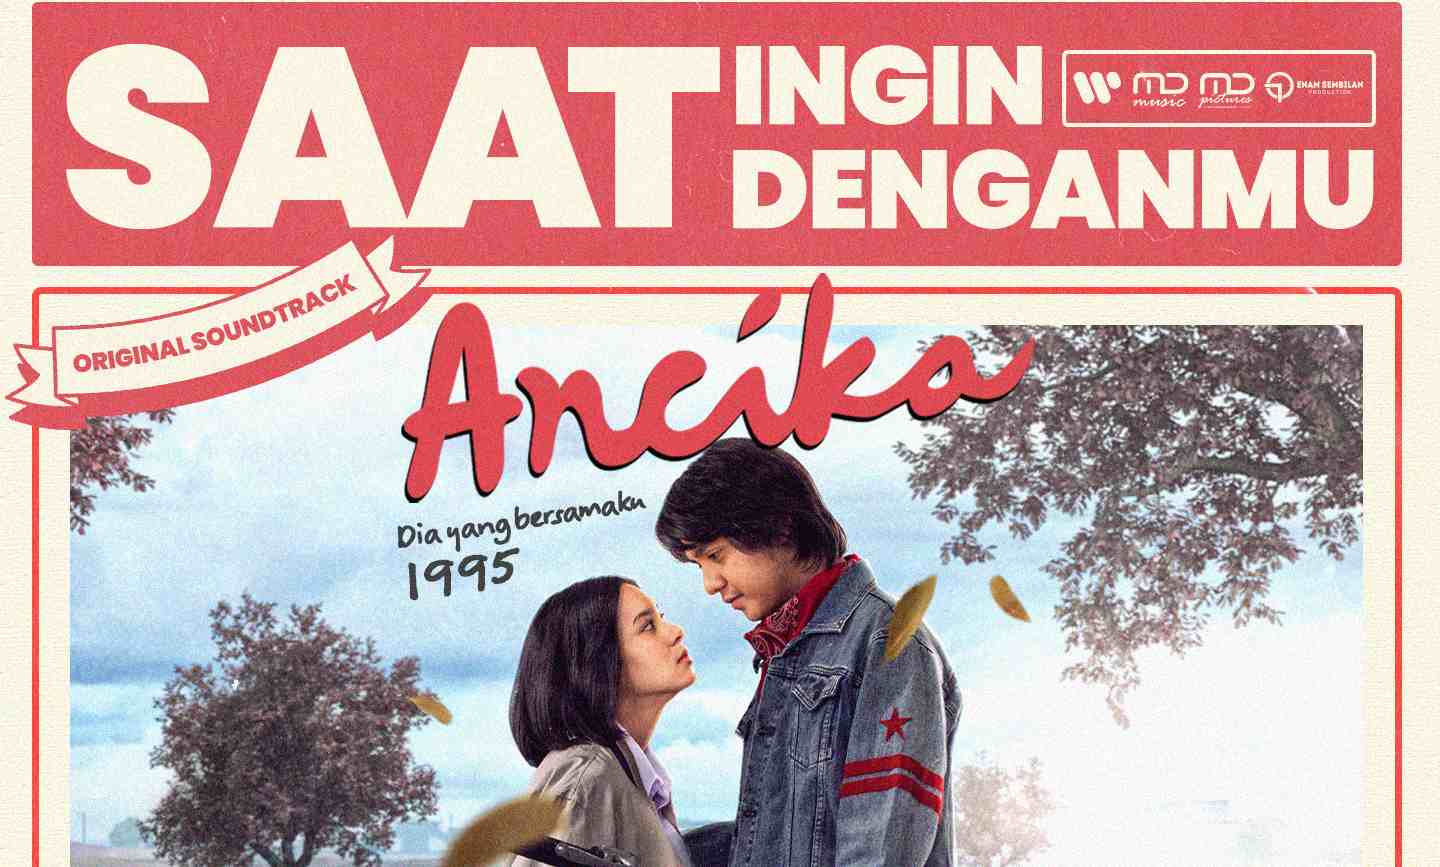 The Panasdalam Bank & Chintya Gabriella Rilis Lagu 'Saat Ingin Denganmu', OST Film 'Ancika'